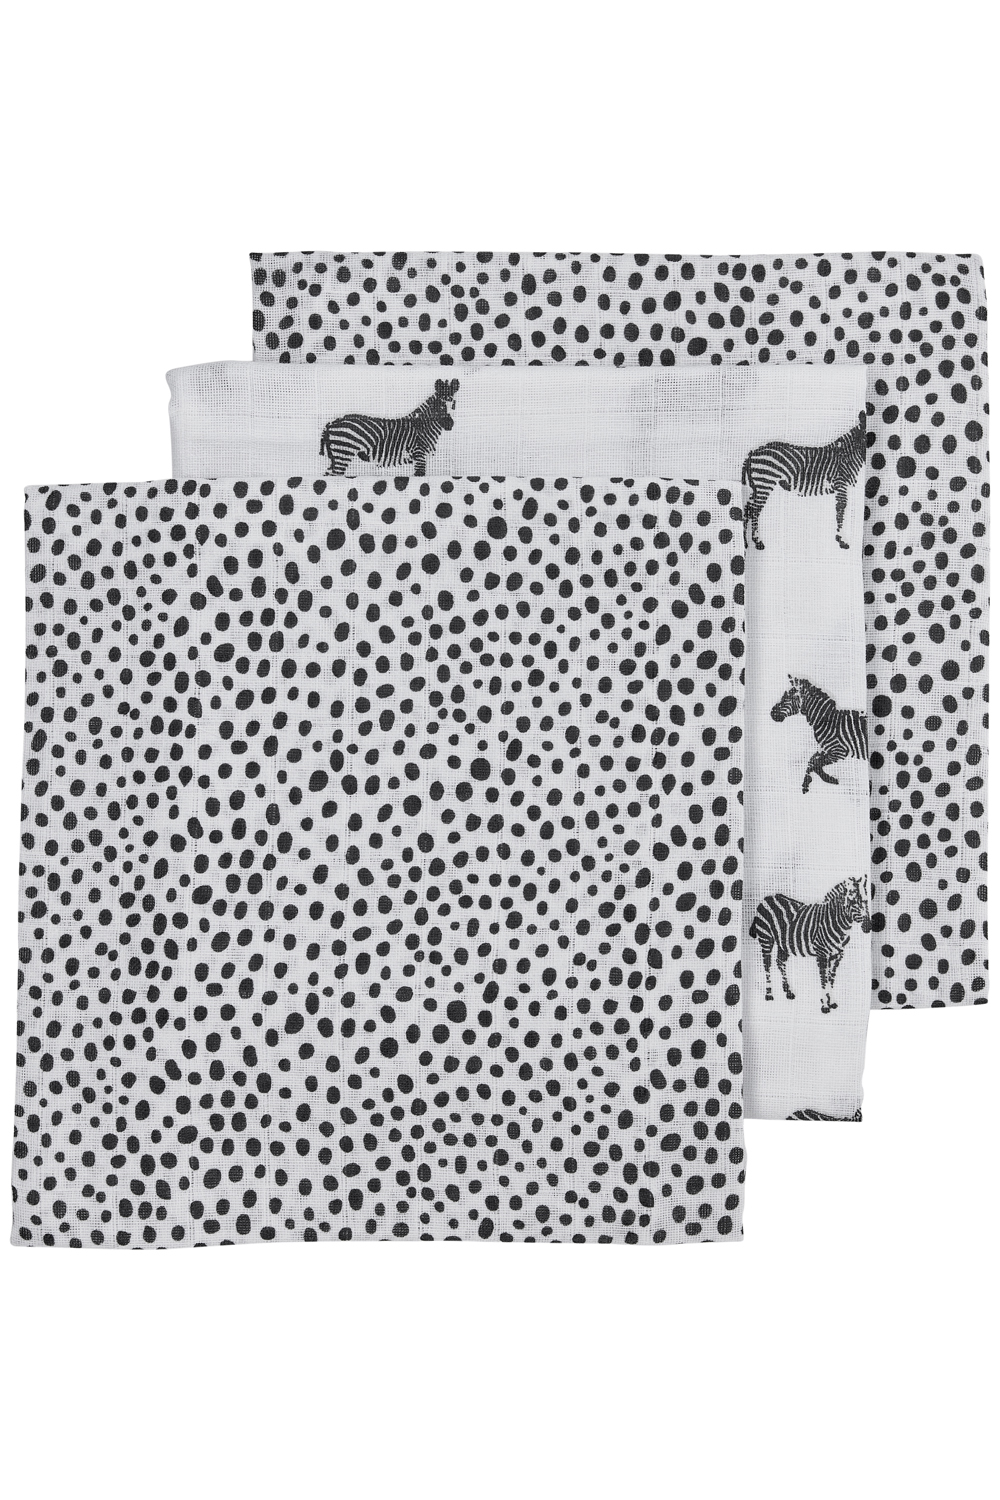 Hydrofiele doeken 3-pack Zebra Animal - black - 70x70cm